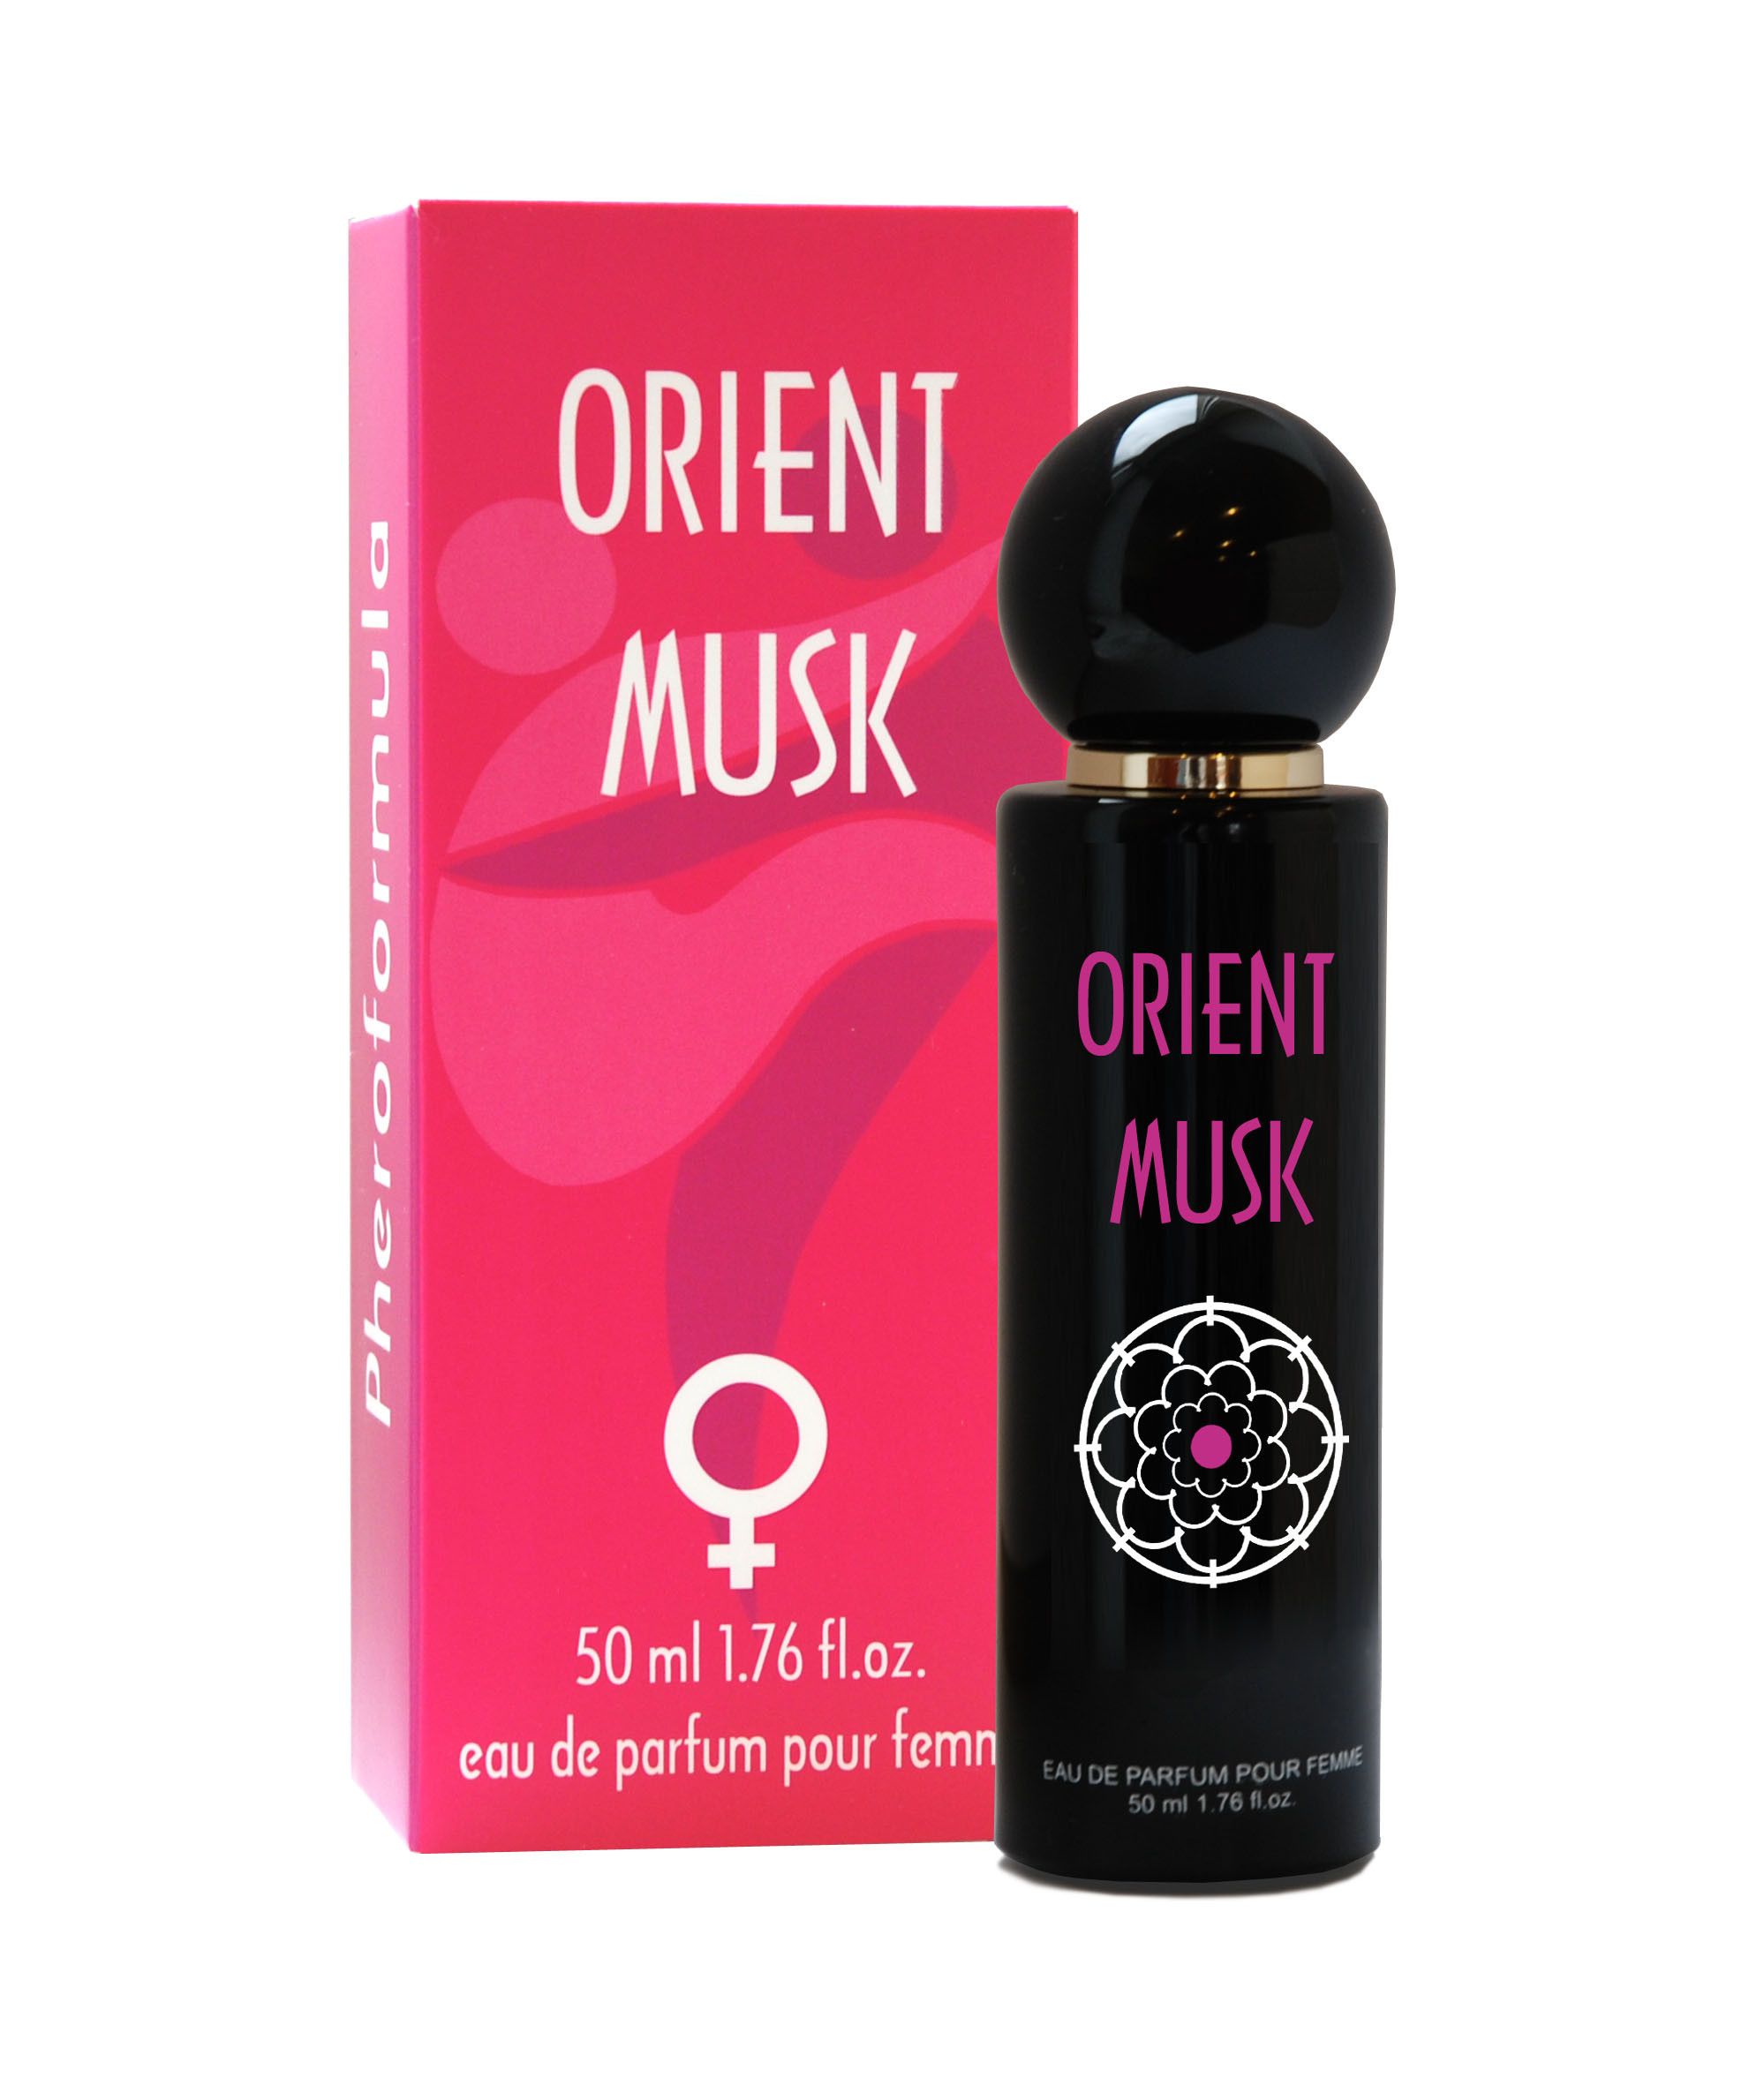 Orient Musk 50 ml for women